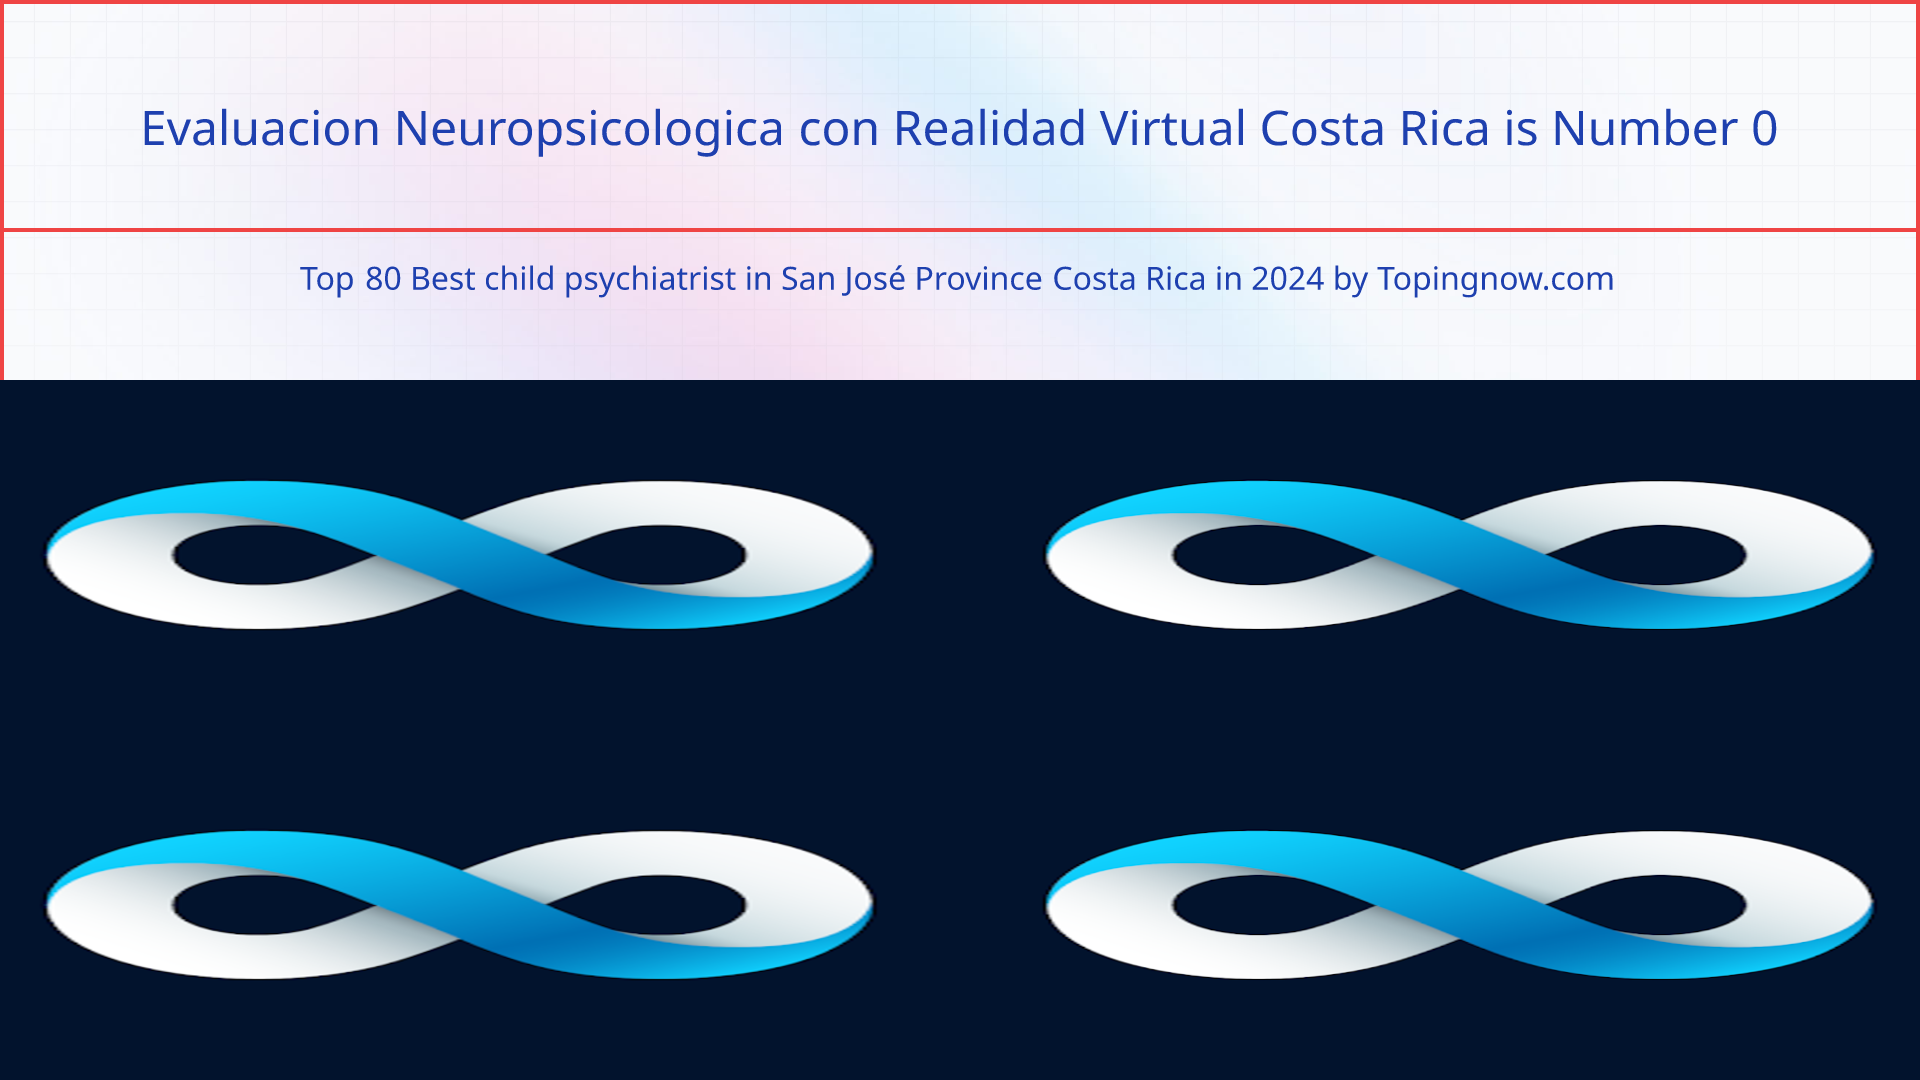 Evaluacion Neuropsicologica con Realidad Virtual Costa Rica: Top 80 Best child psychiatrist in San José Province Costa Rica in 2024